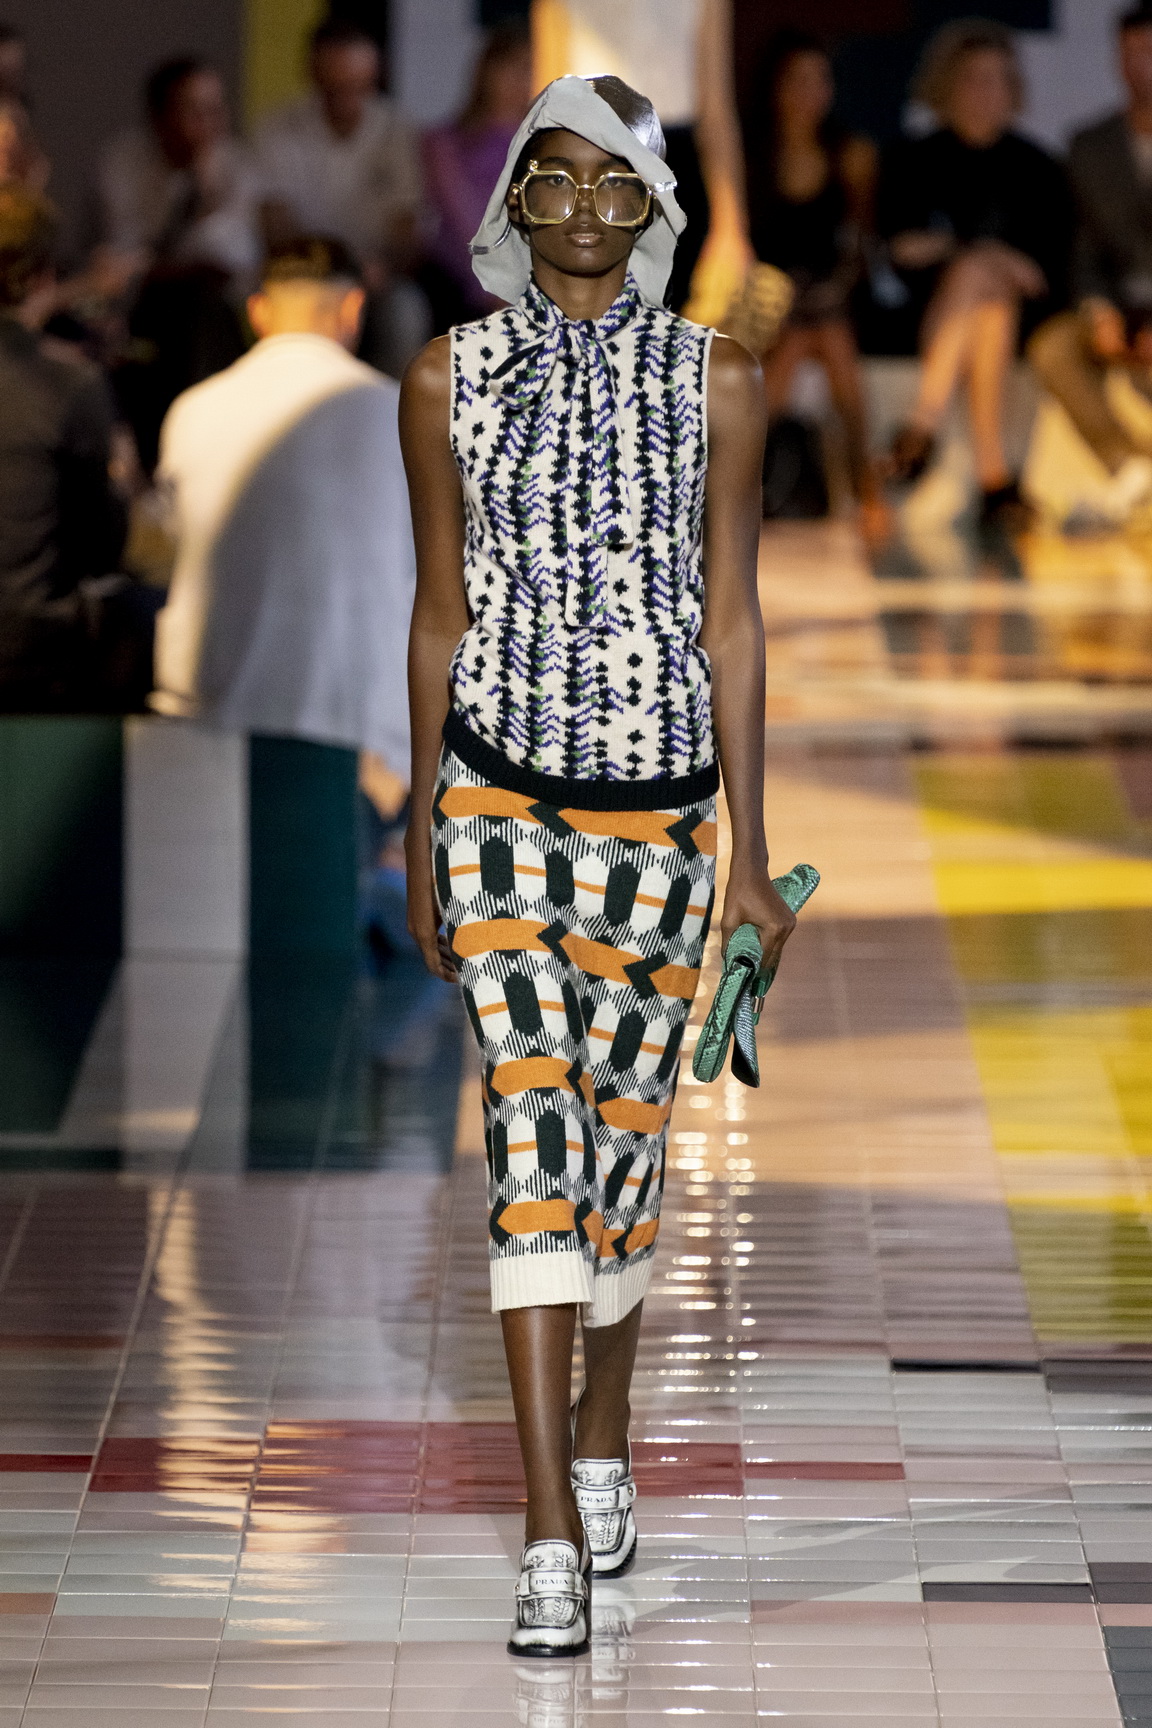 Prada womenswear SS20 catwalk show review and images at Milan Fashion Week